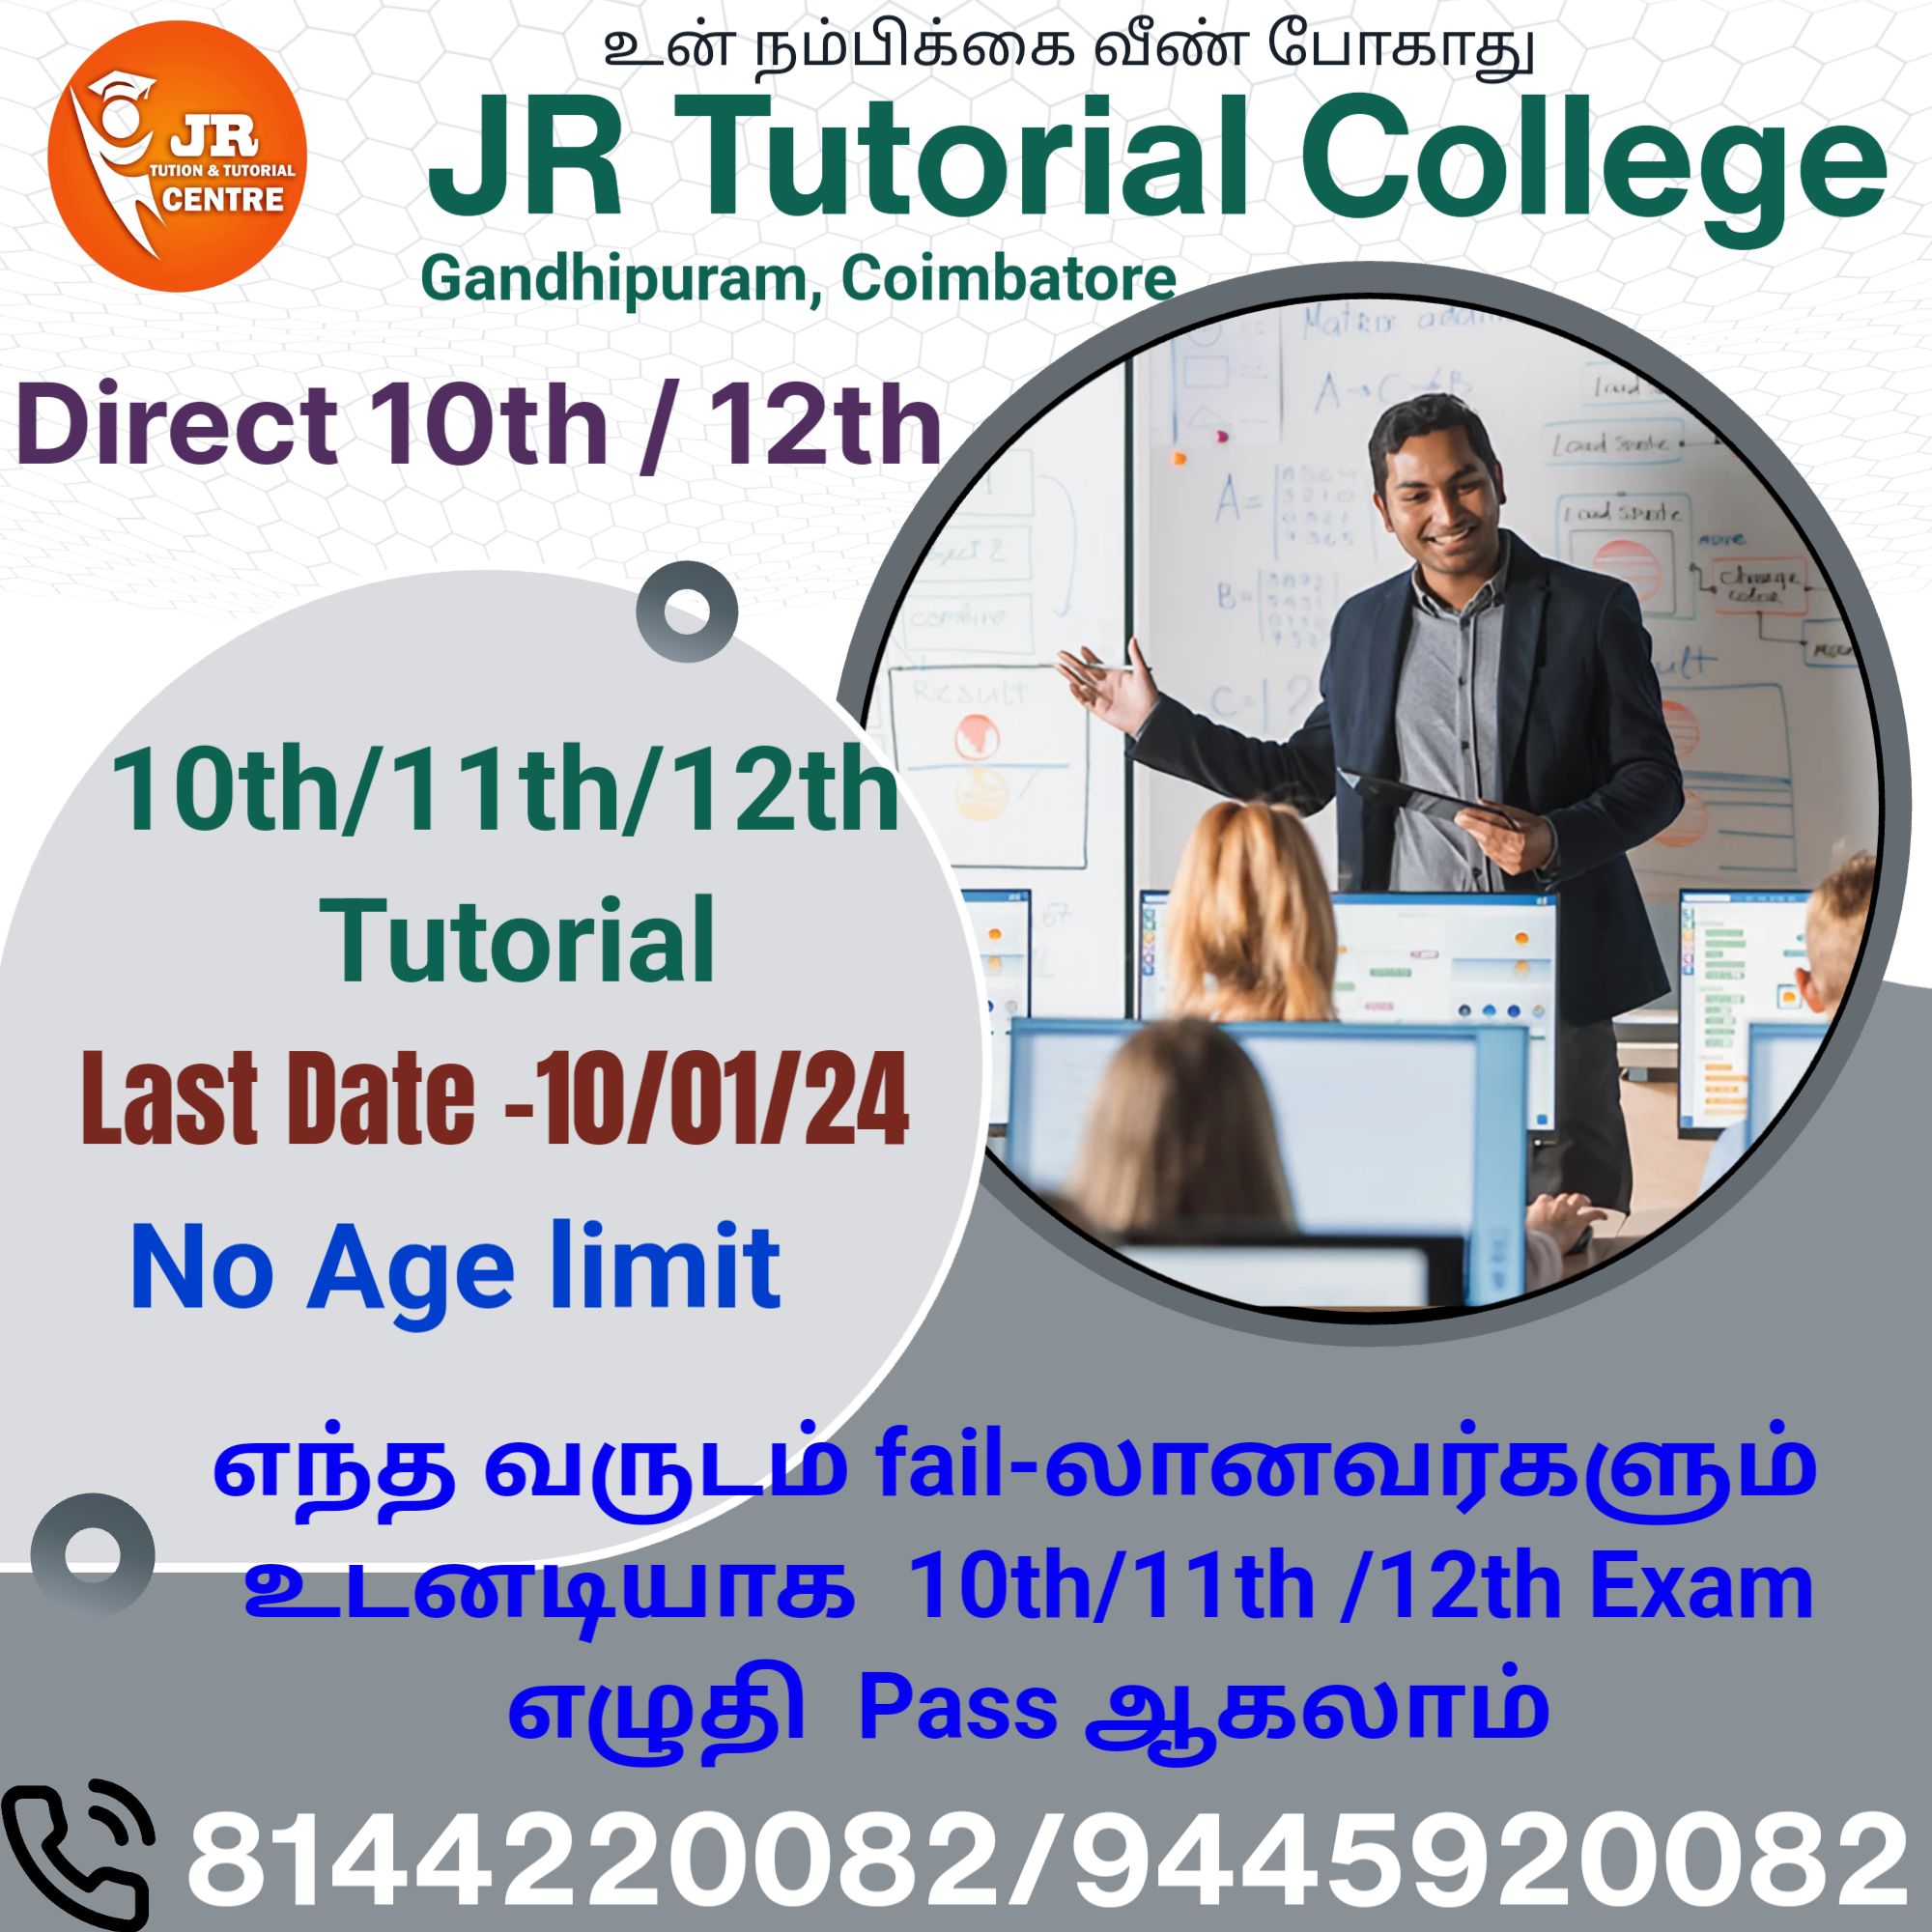 tutorial college near me in Coimbatore